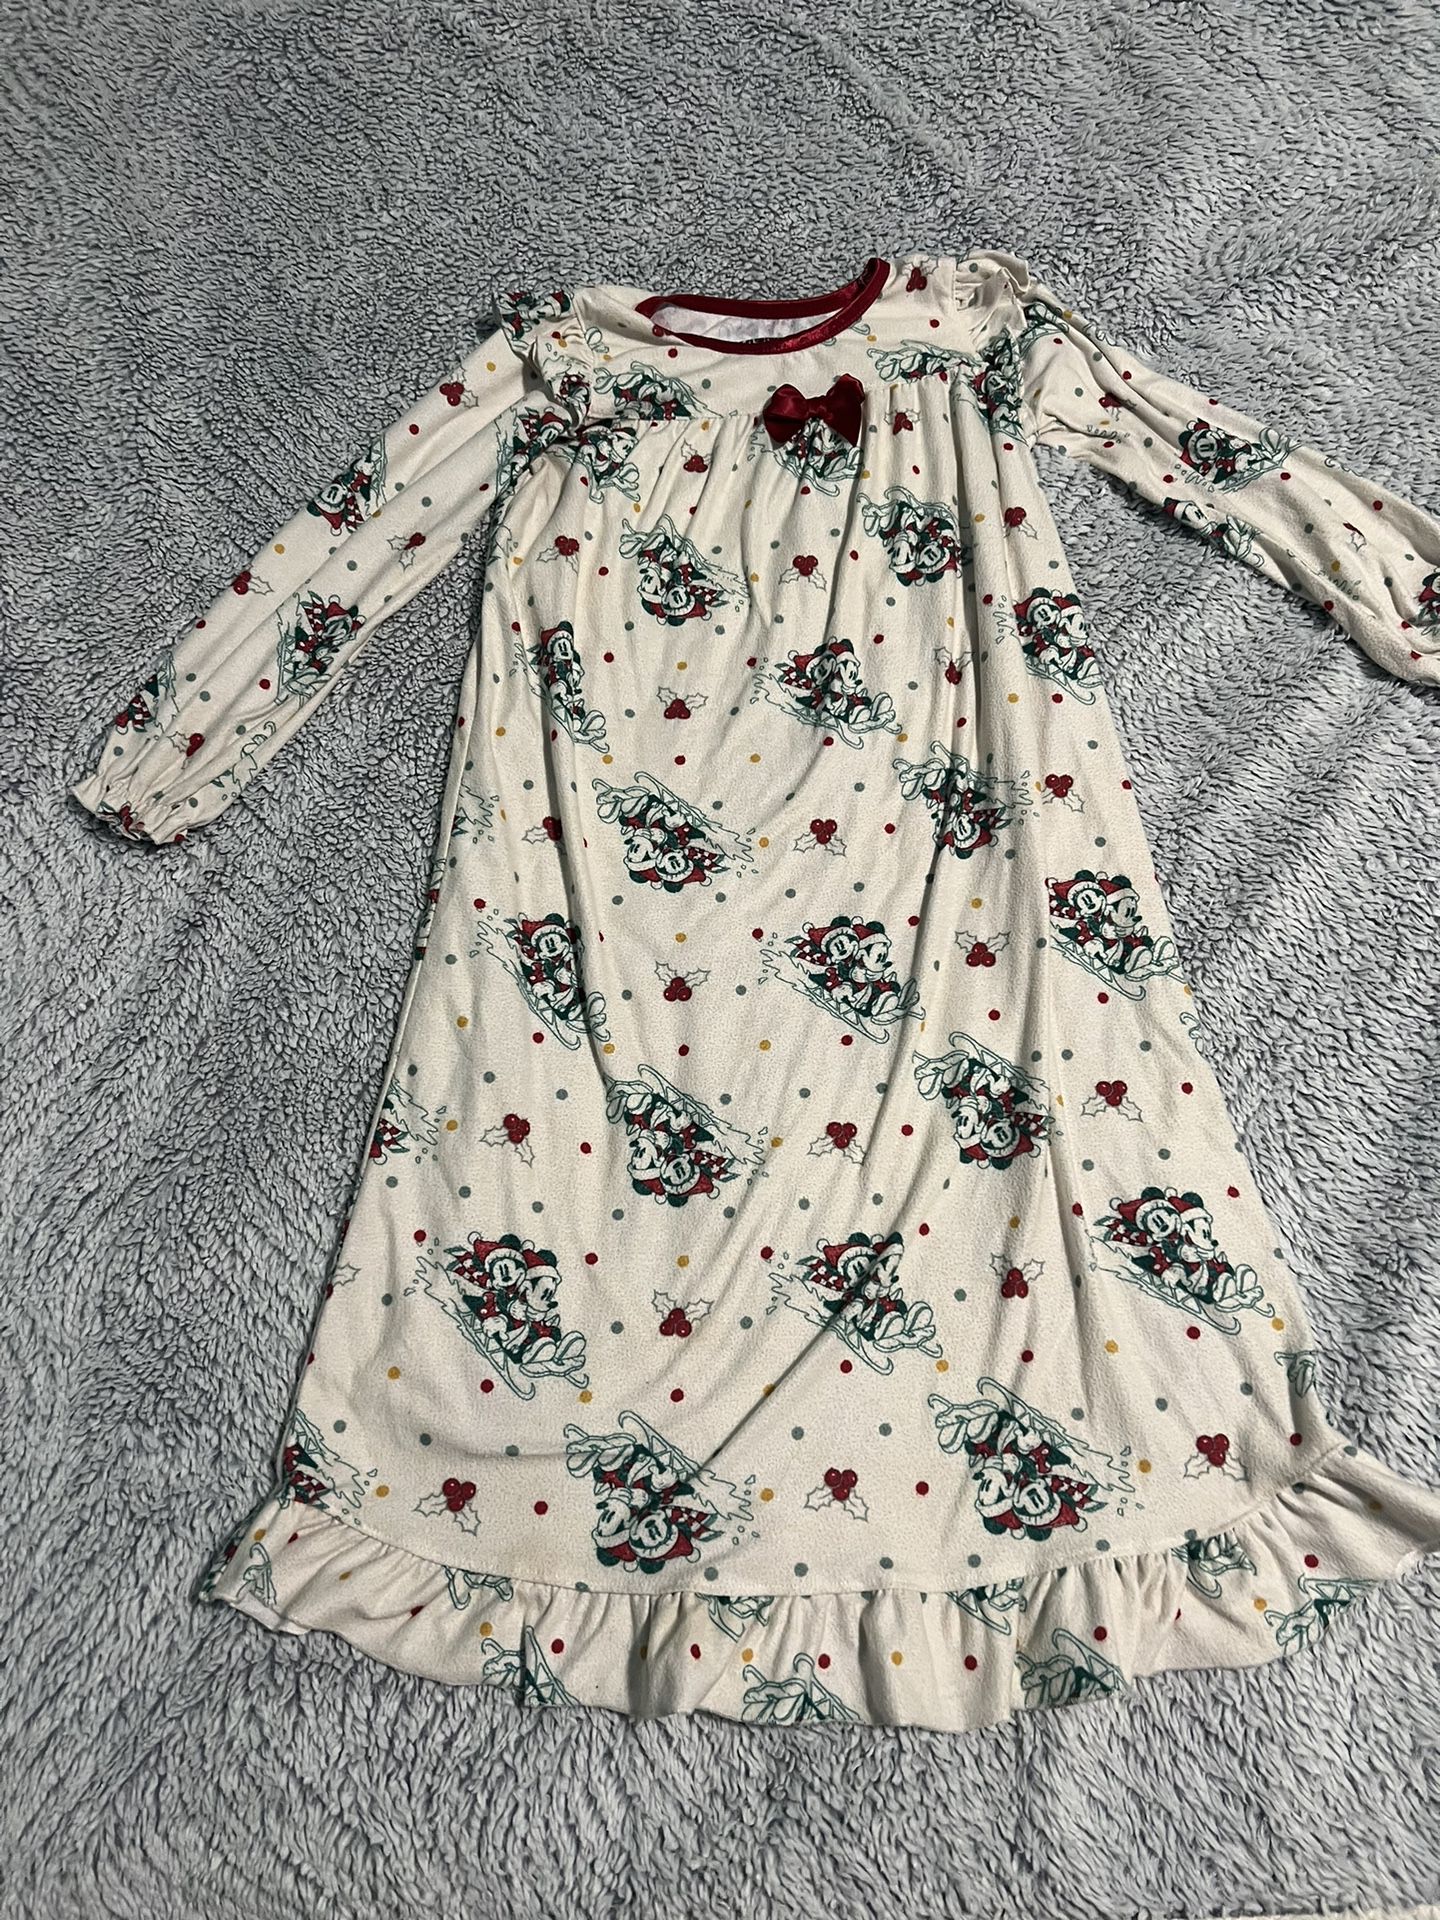 Disney Vintage Nightgown Size 5t